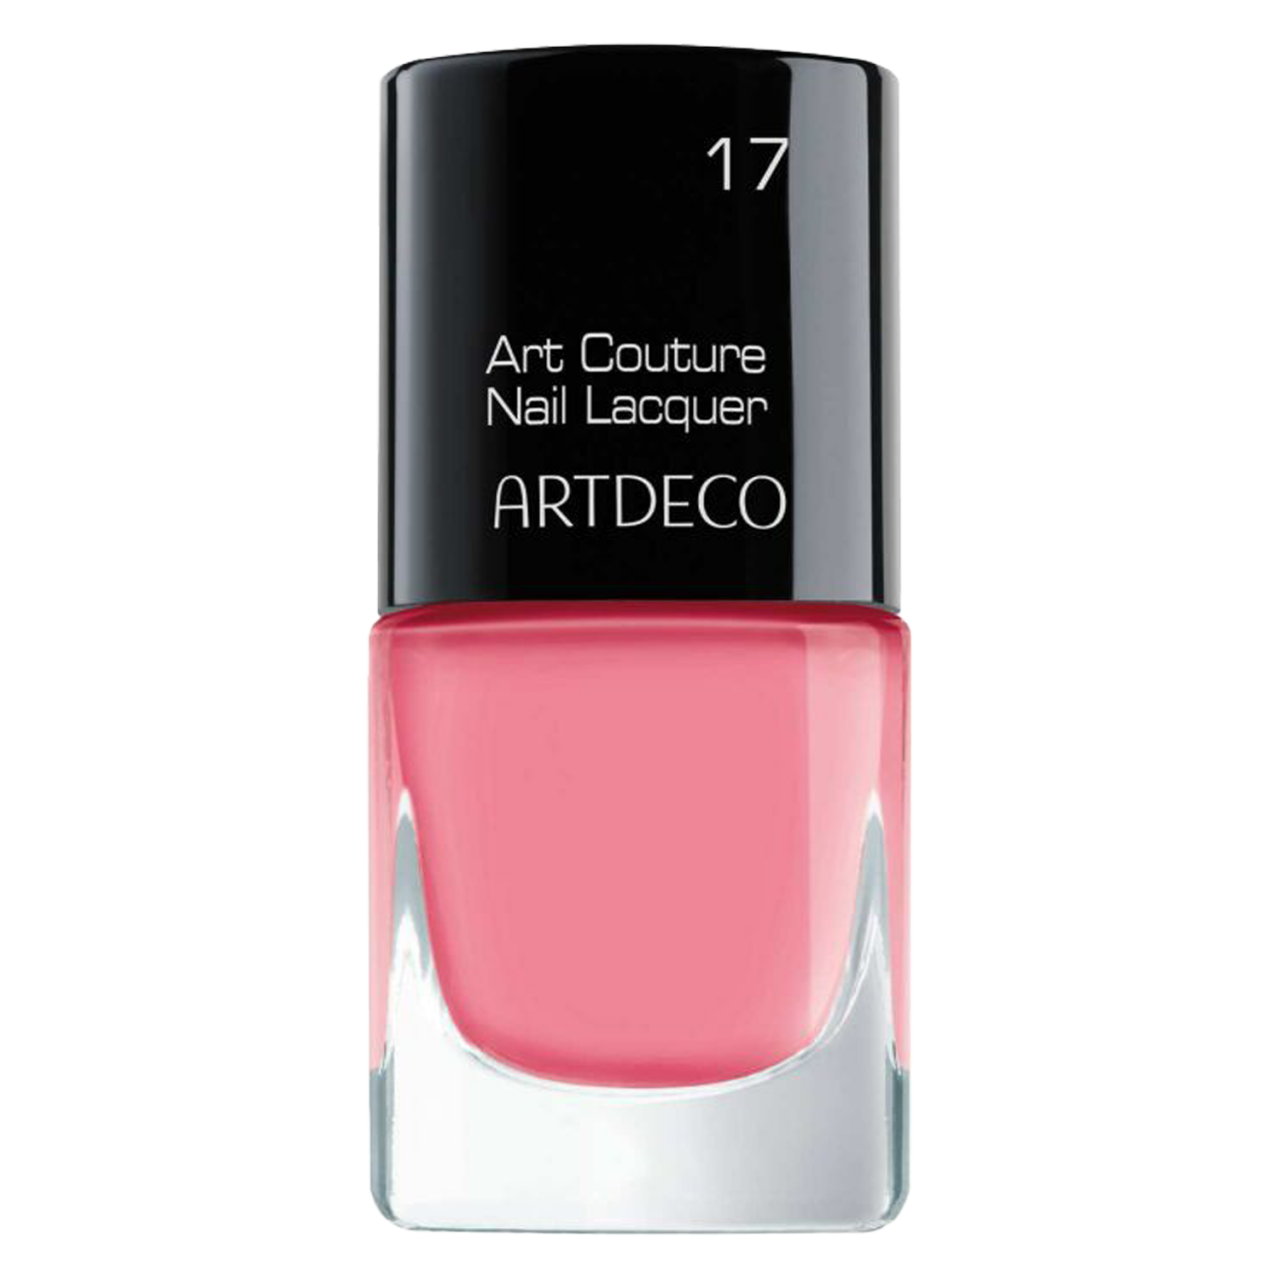 Art Couture - Nail Lacquer Coral Hibiscus 17 von Artdeco